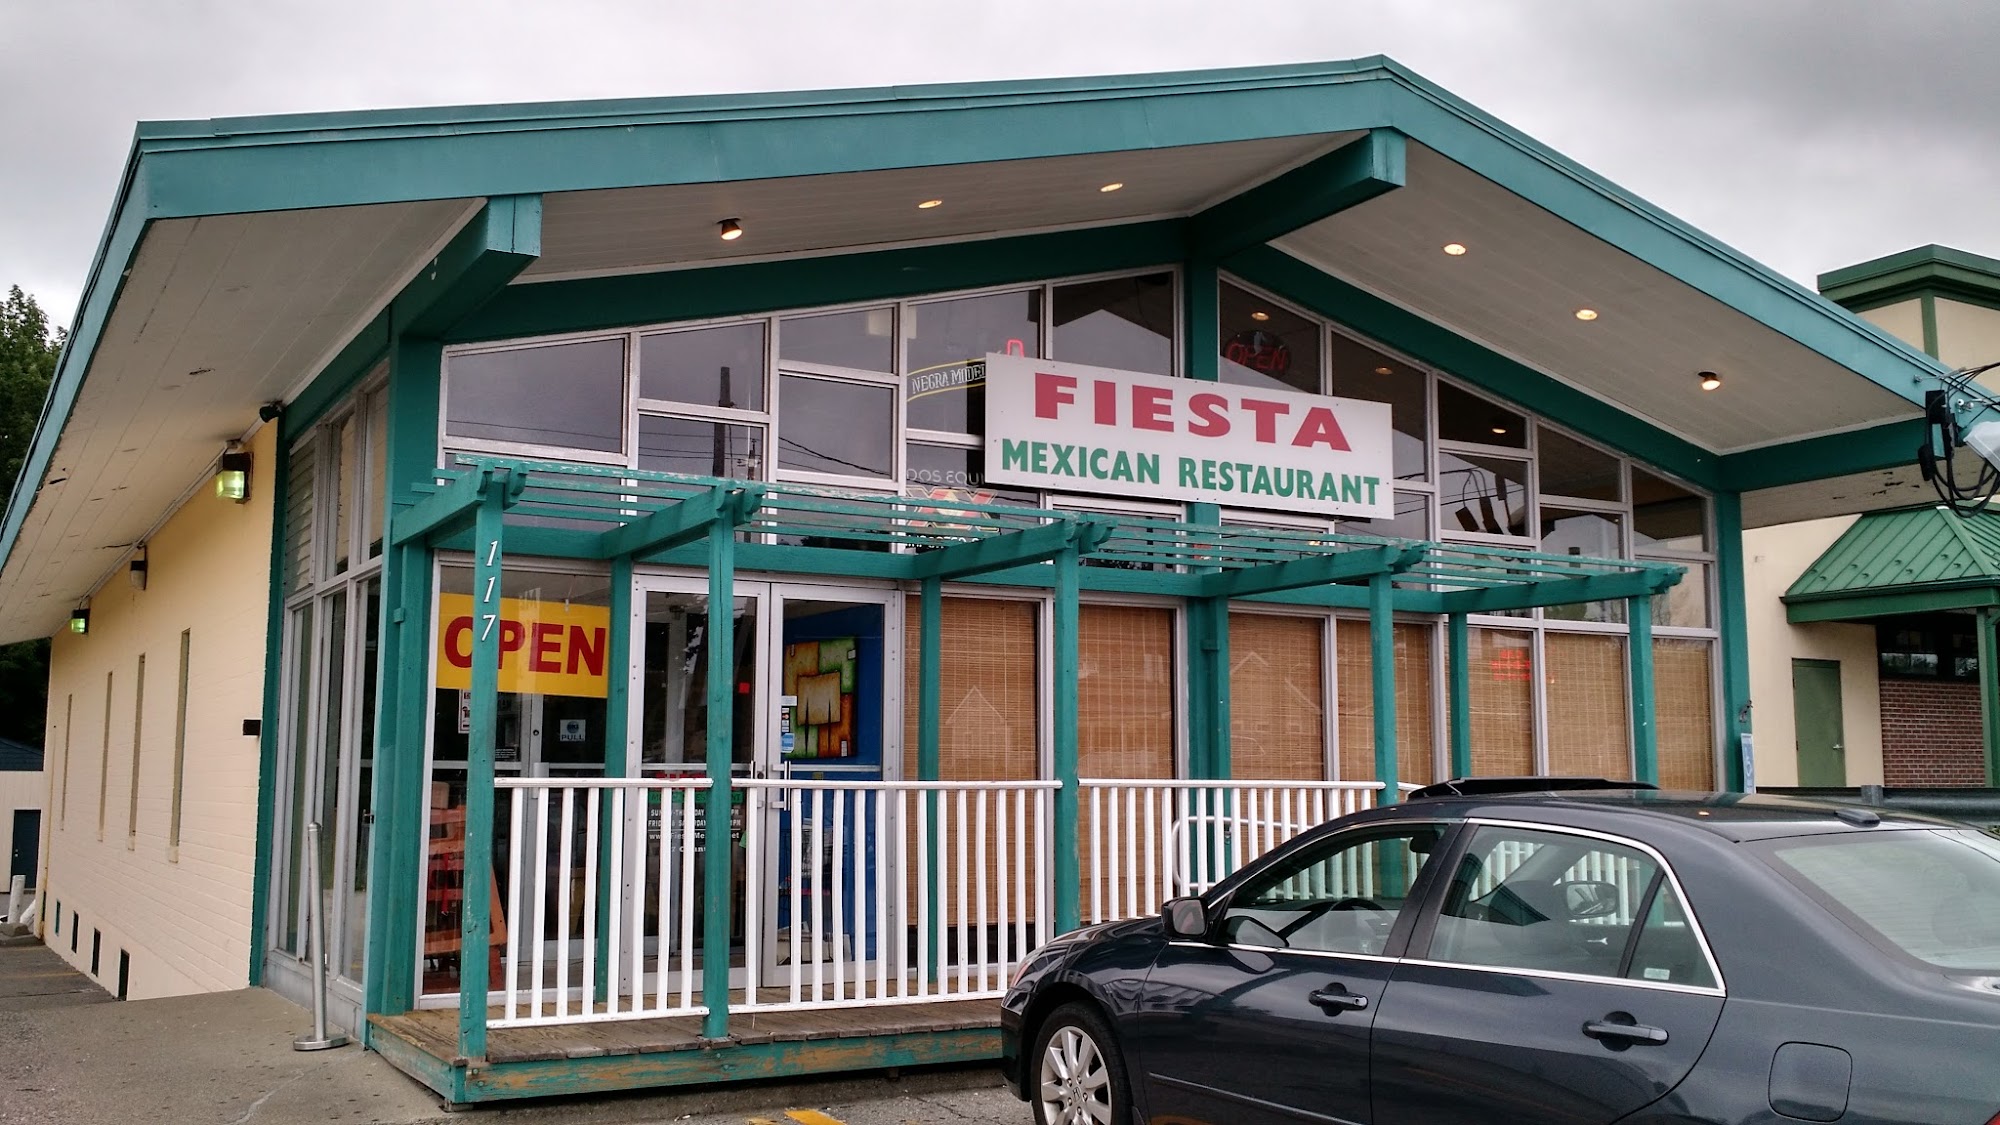 Fiesta Mexican Restaurant